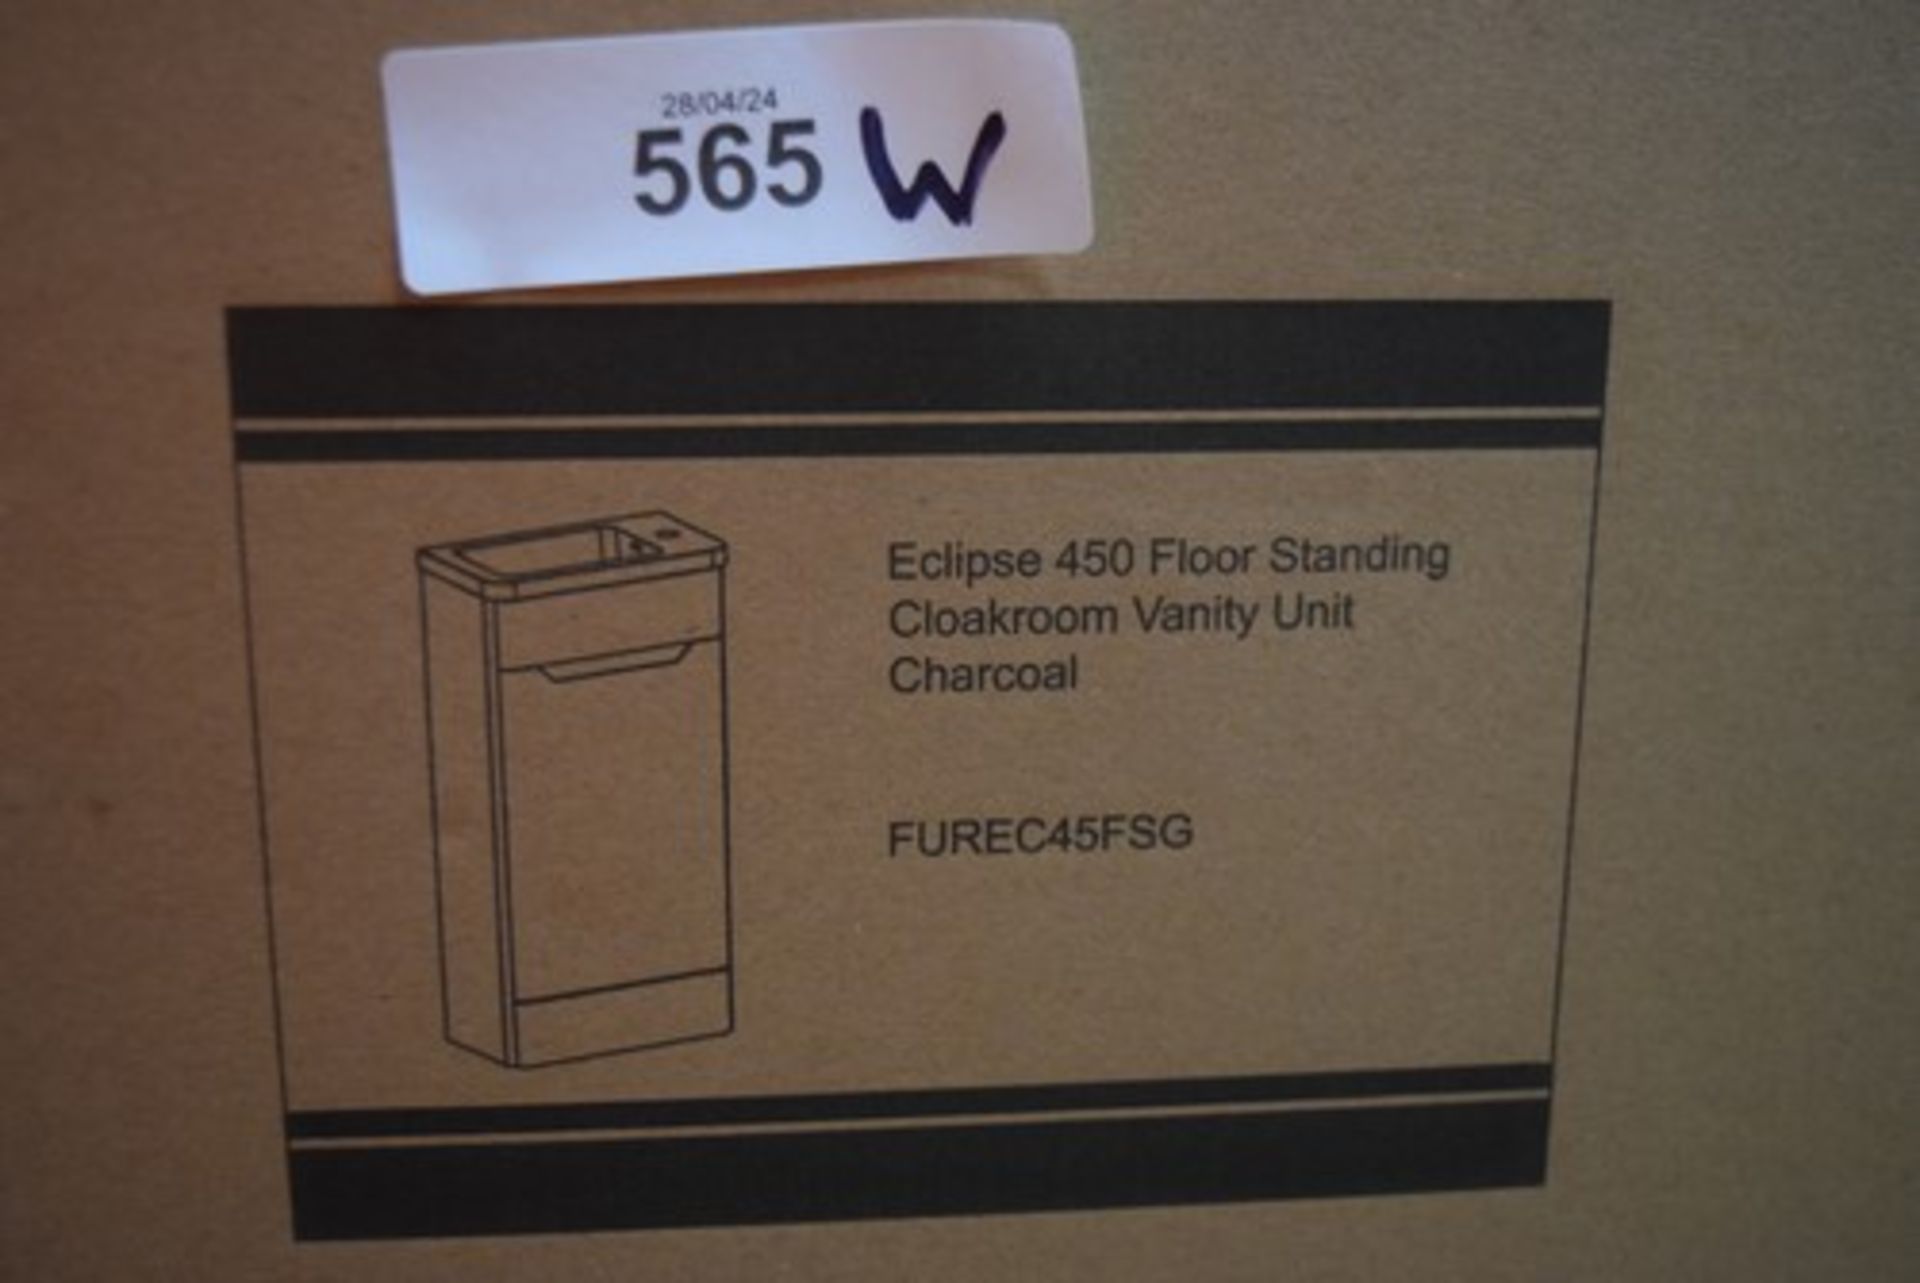 1 x Cubico Eclipse 450 floor standing vanity unit, charcoal, item No: FUREC45FS6, together with 1